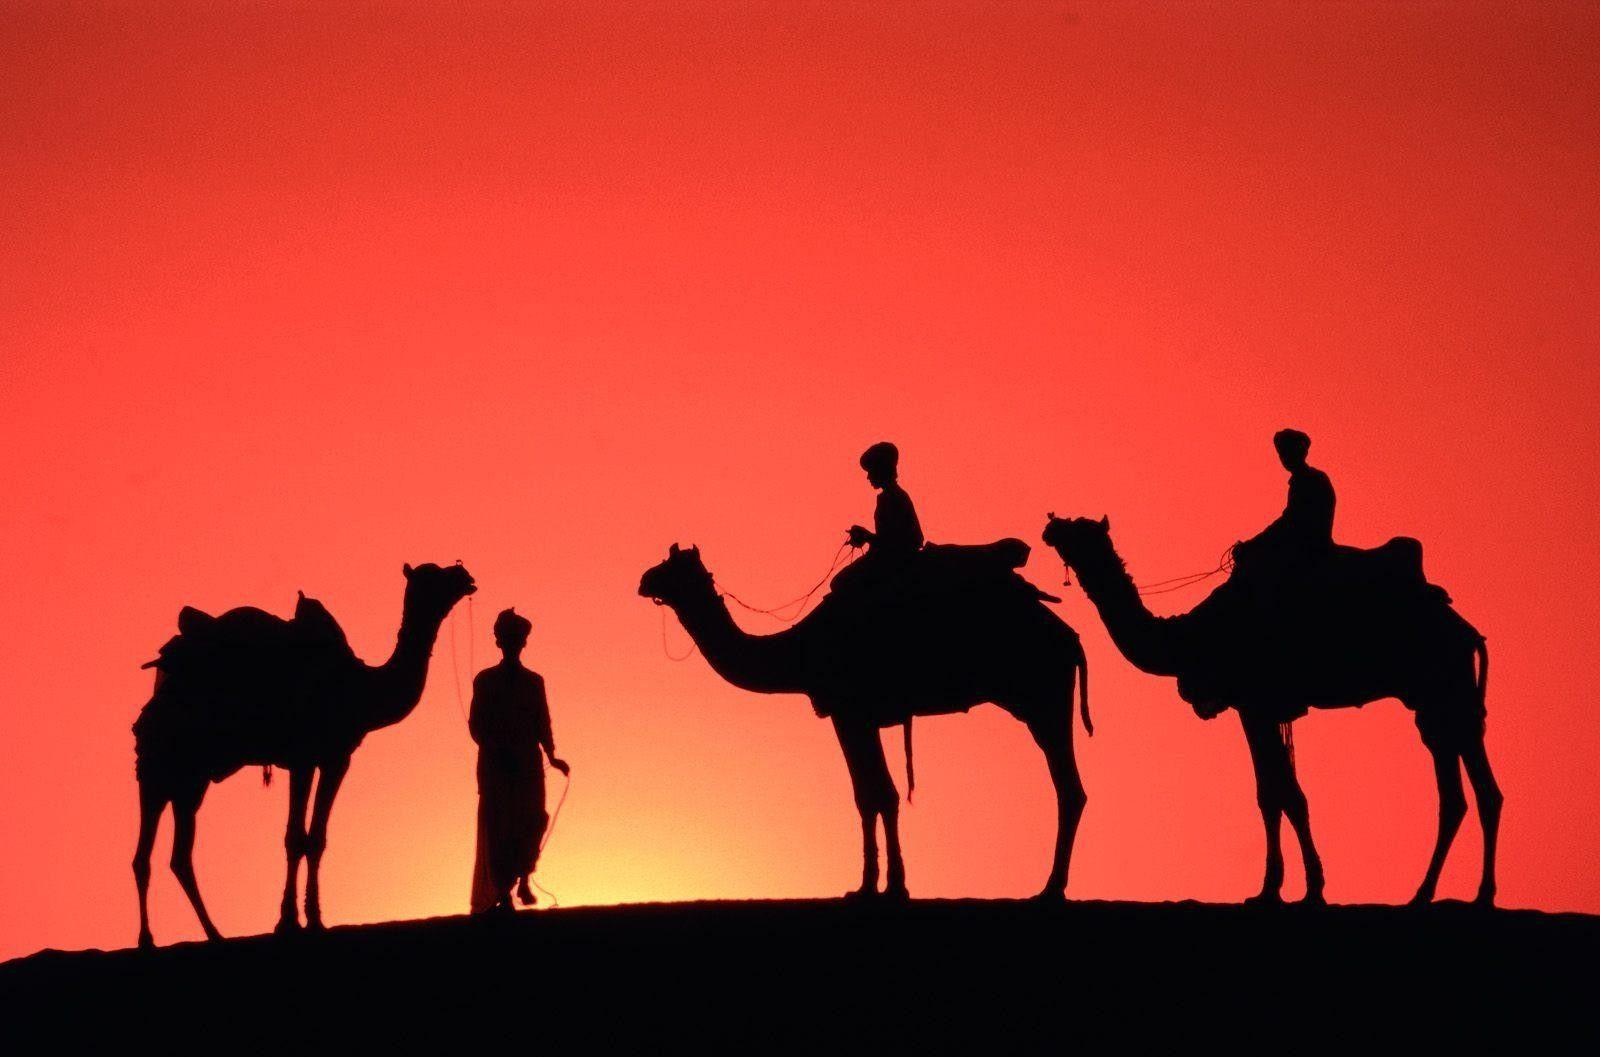 red camels travel sahara vvvvvv arab 1600x1057 wallpaper High